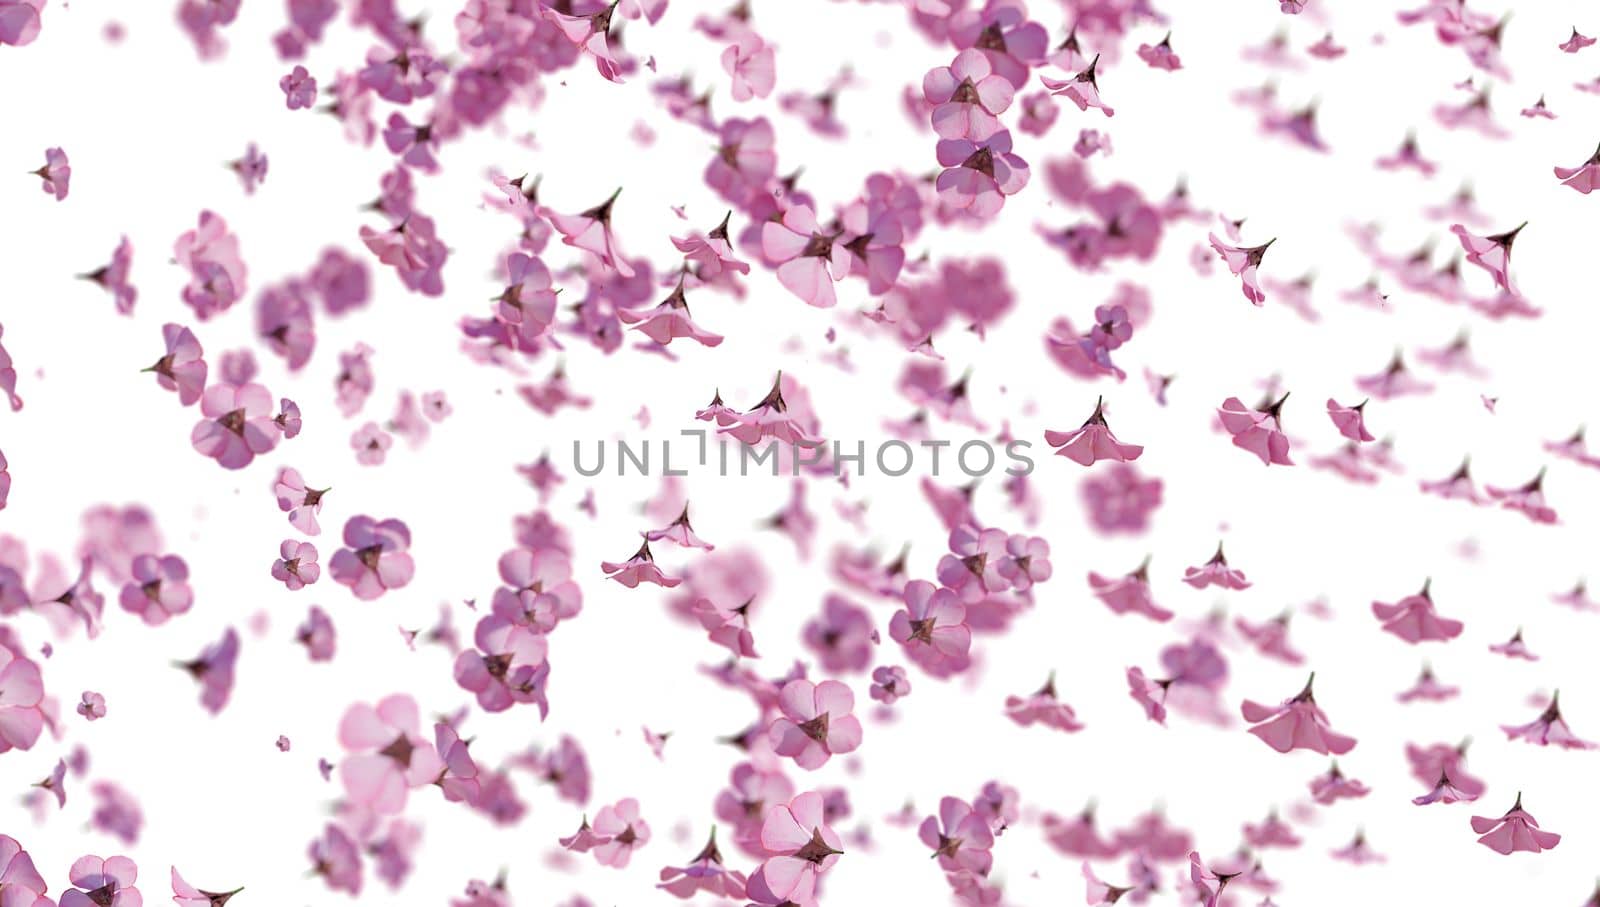 Pink sakura falling petals background. 3D romantic illustration